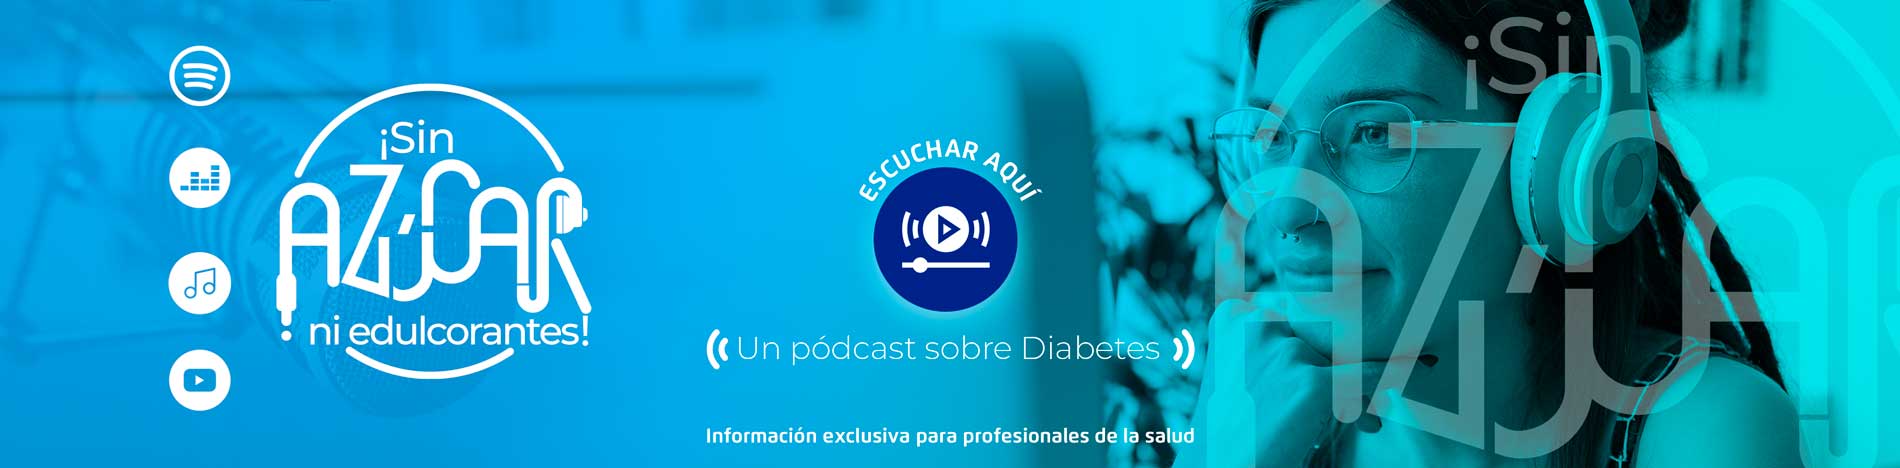 Podcast Diabetrics